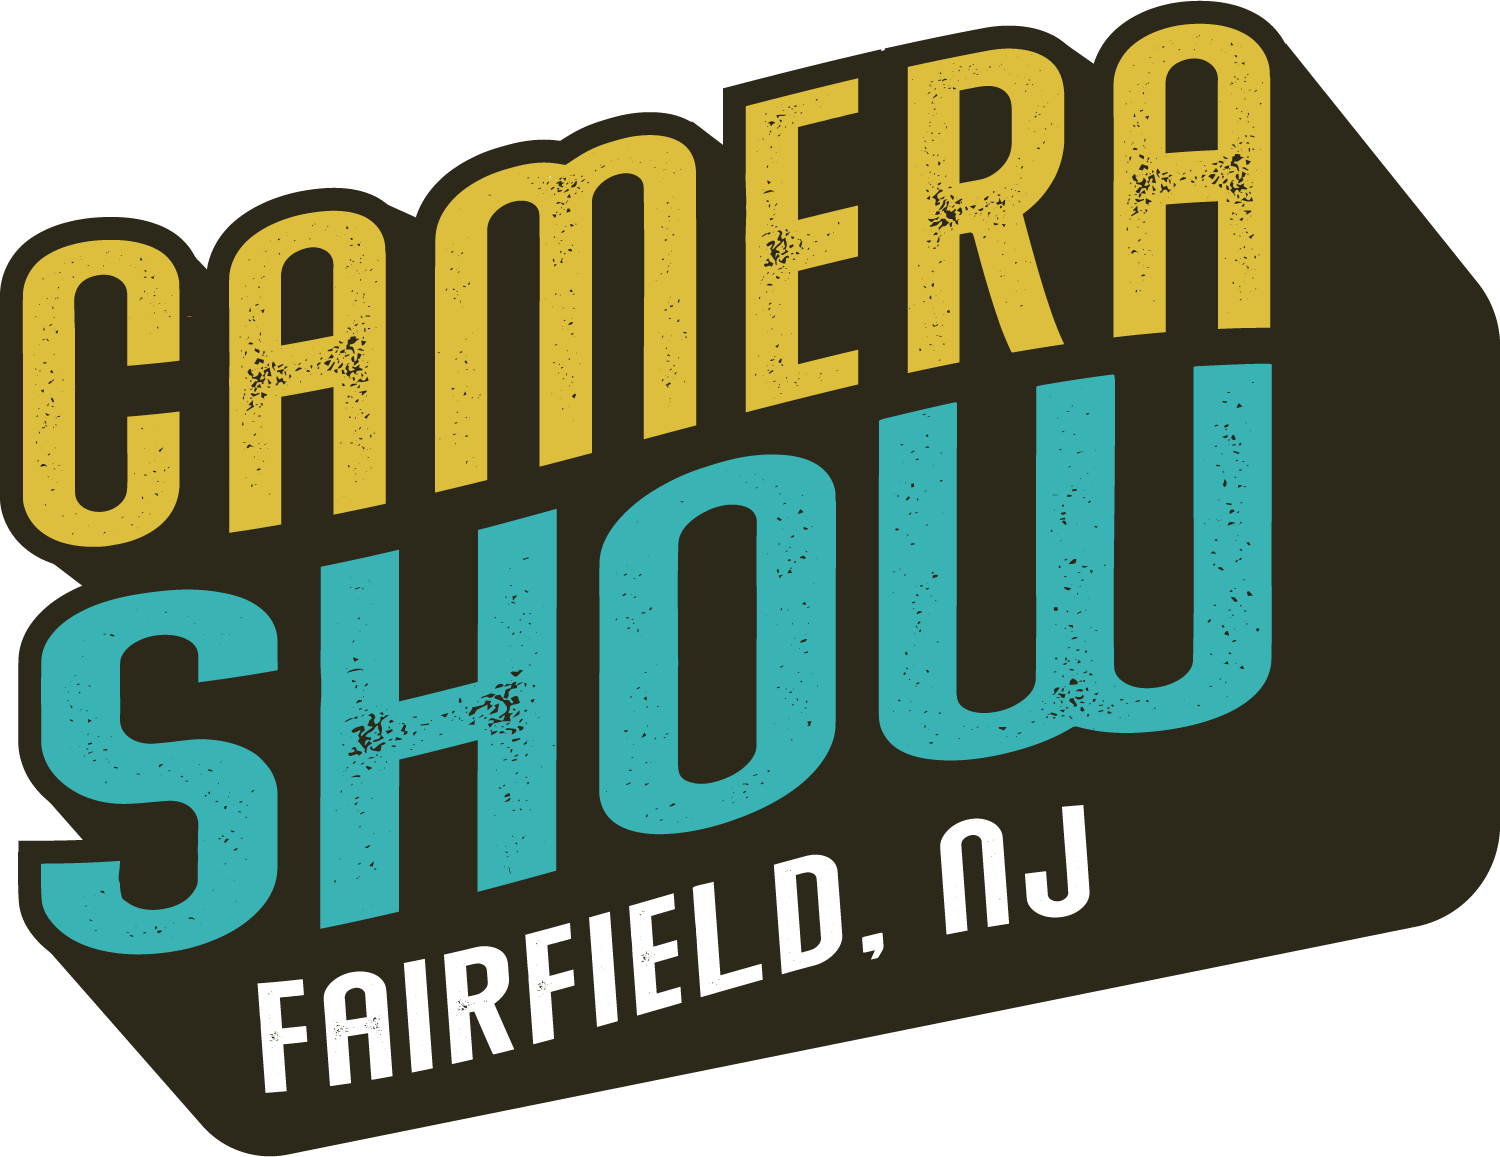 NJ Camera Show - Dec 1-3 Fairfield, NJ